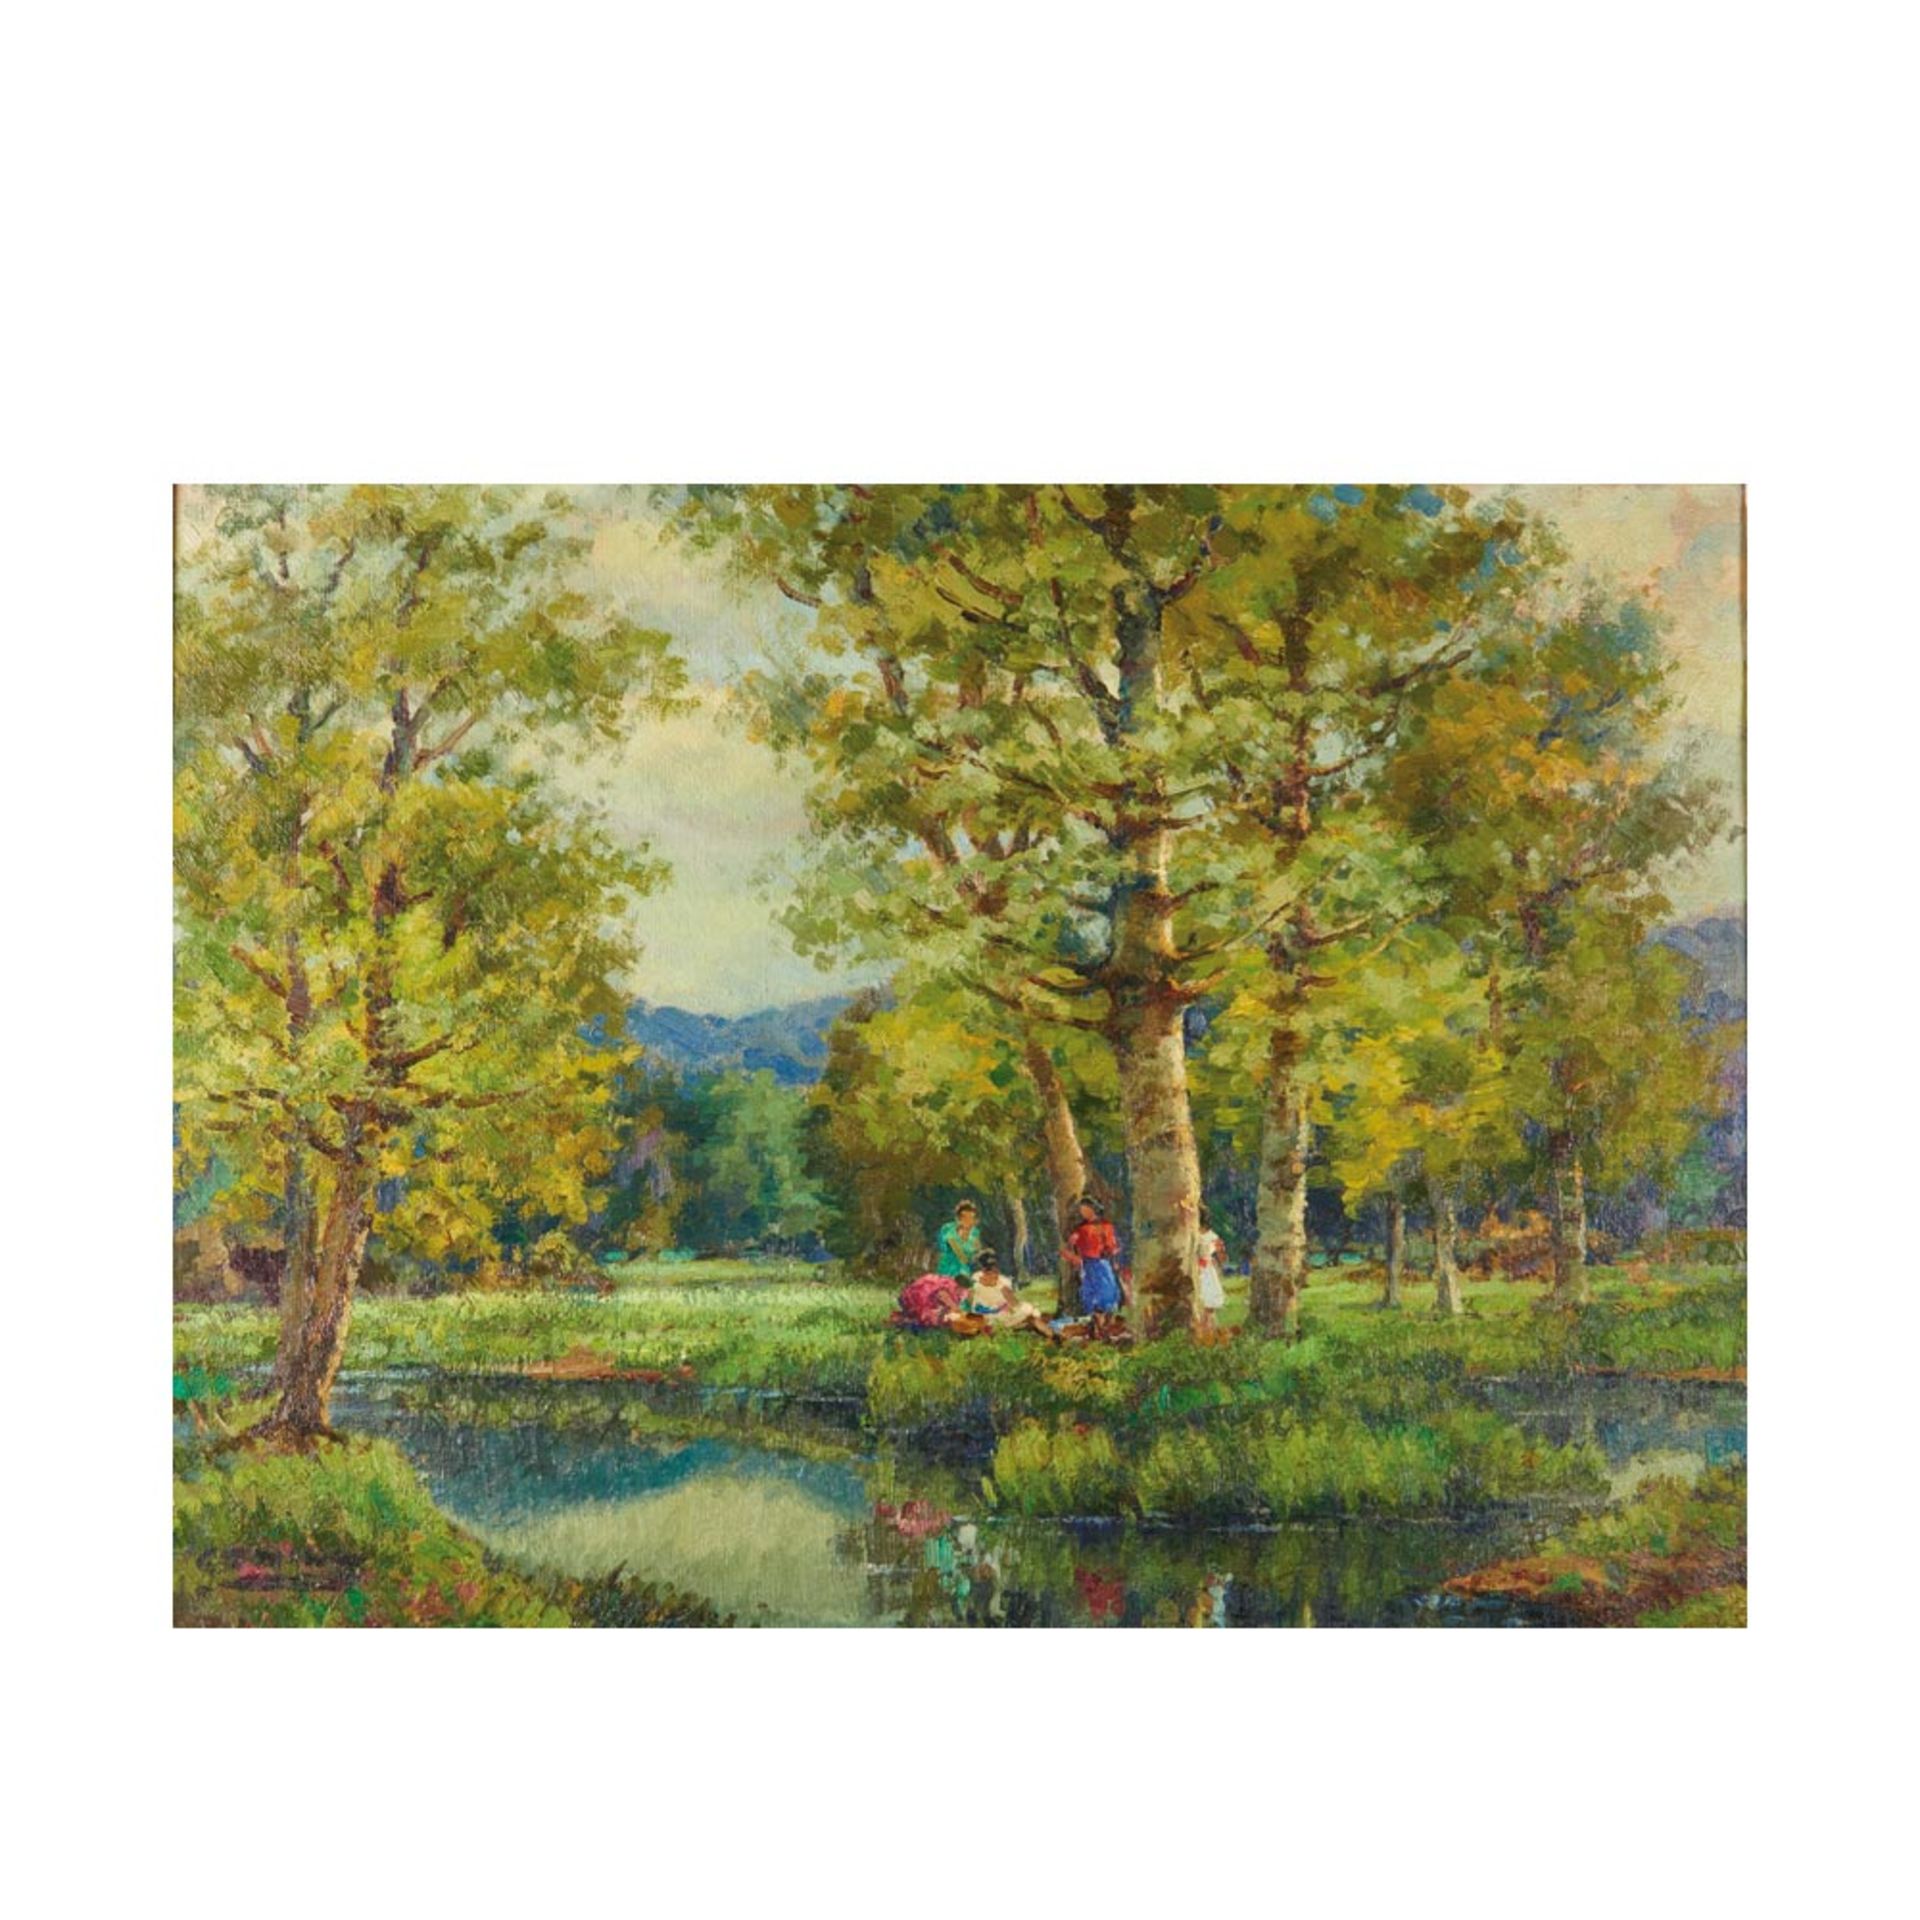 Landscape. Oil on canvas